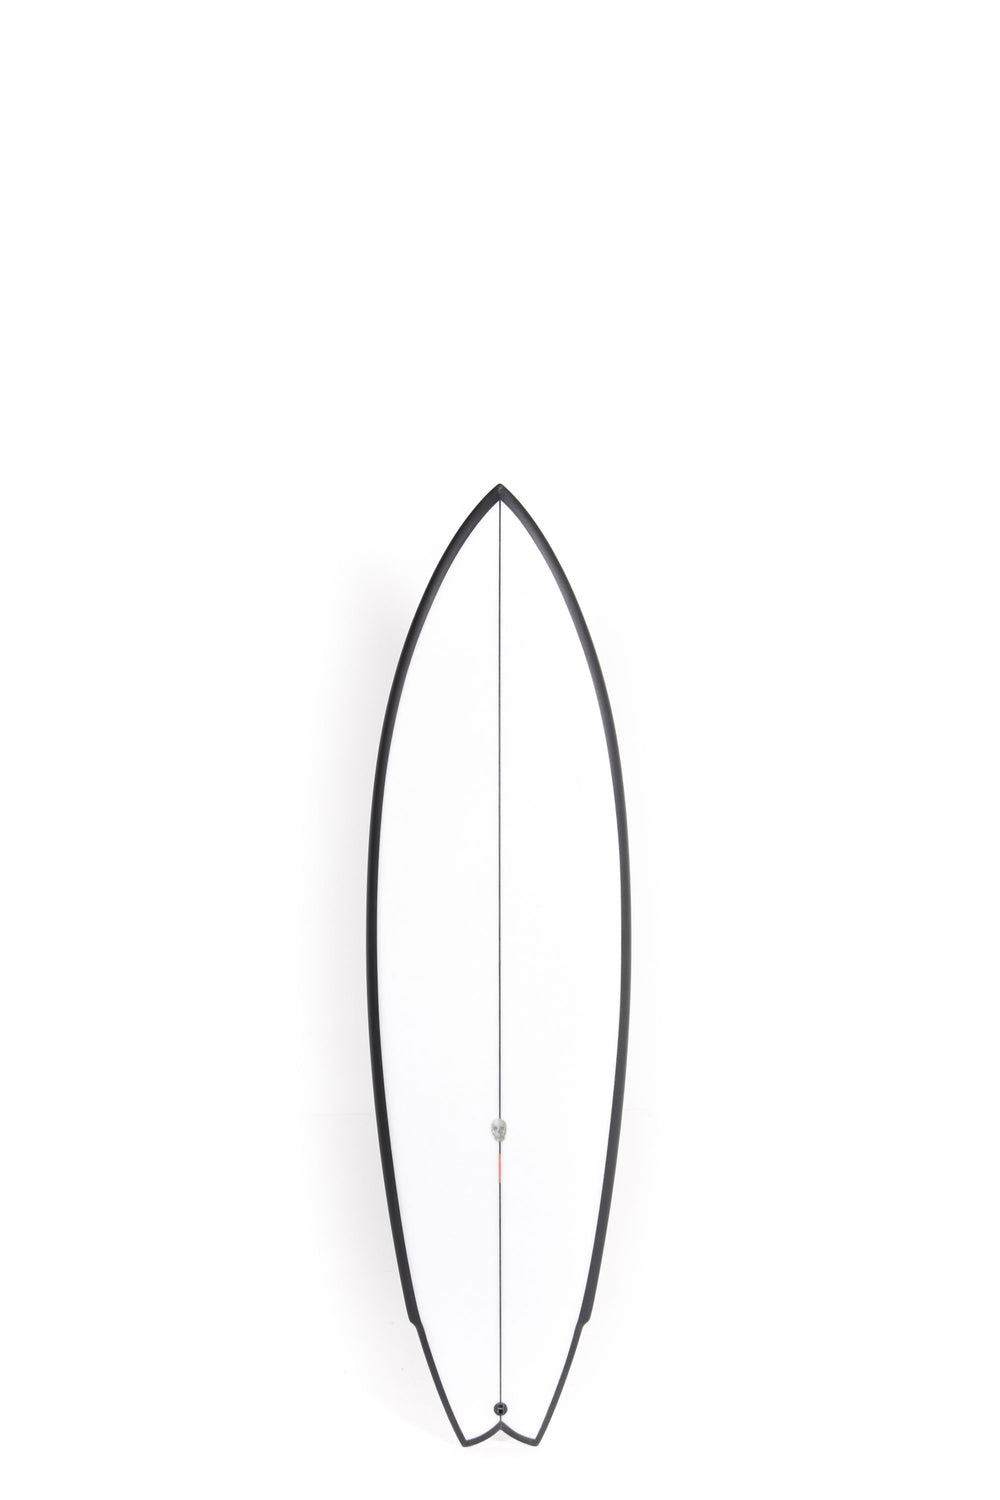 Pukas Surf Shop - Christenson Surfboards - LANE SPLITTER SWALLOW - 6'1 3/4